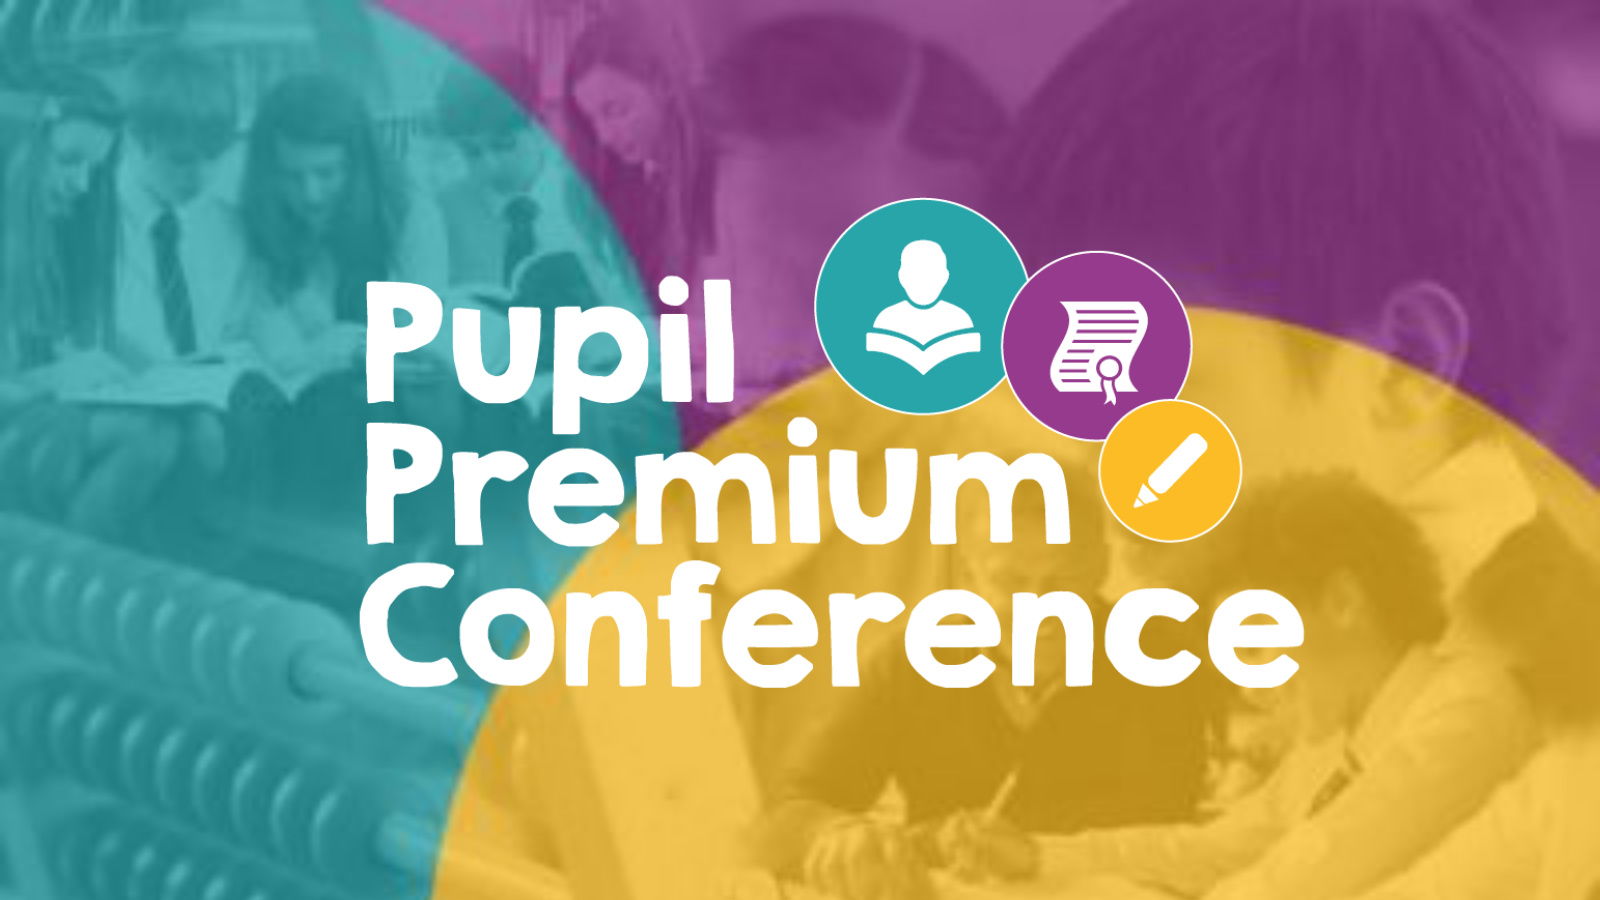 Pupil Premium Conference